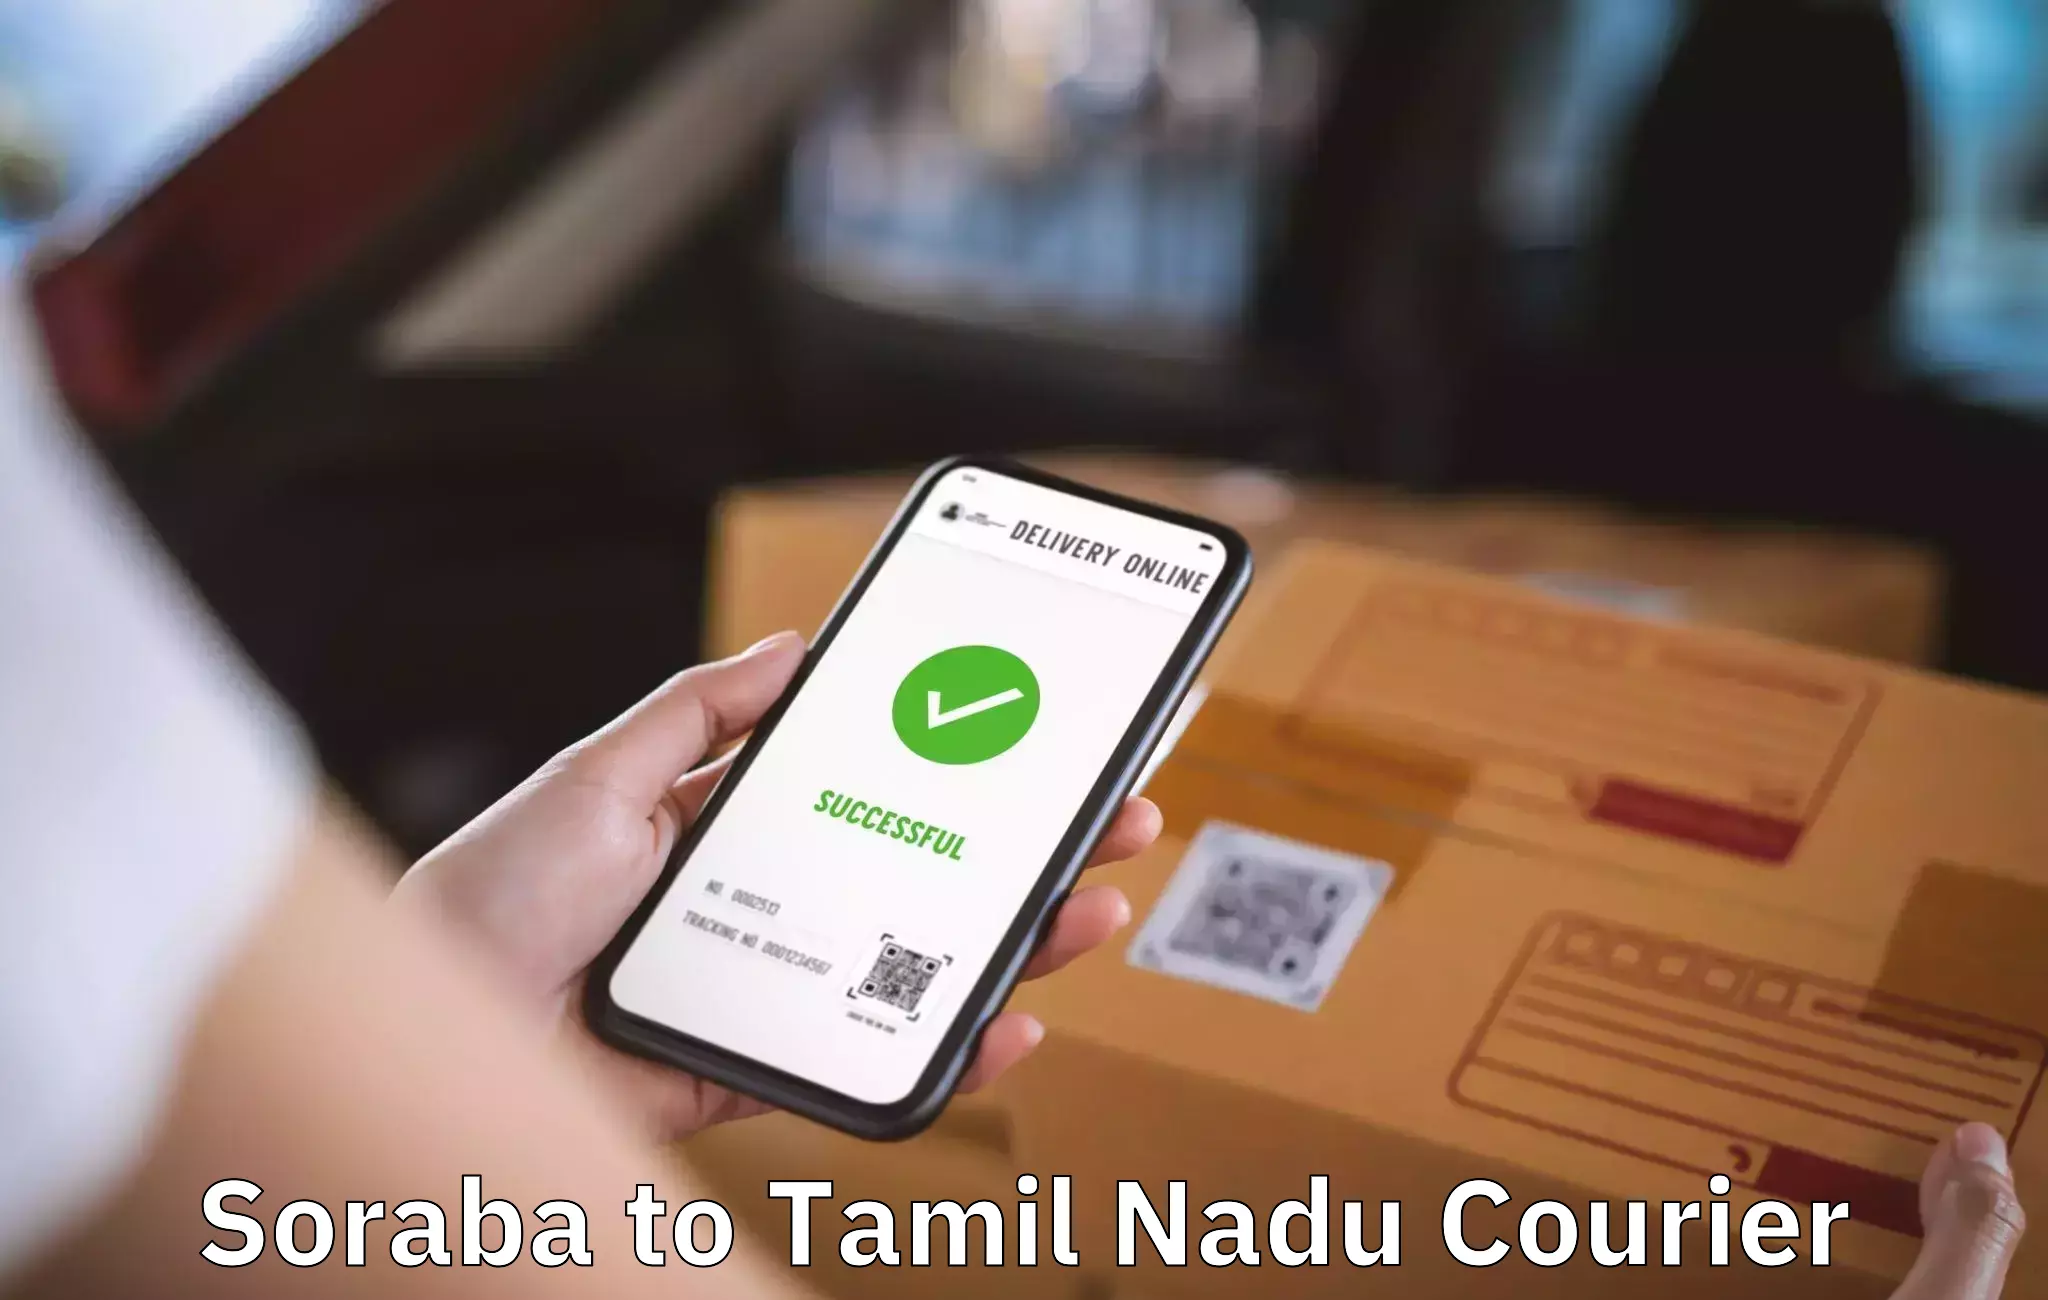 Expert moving and storage Soraba to Tamil Nadu